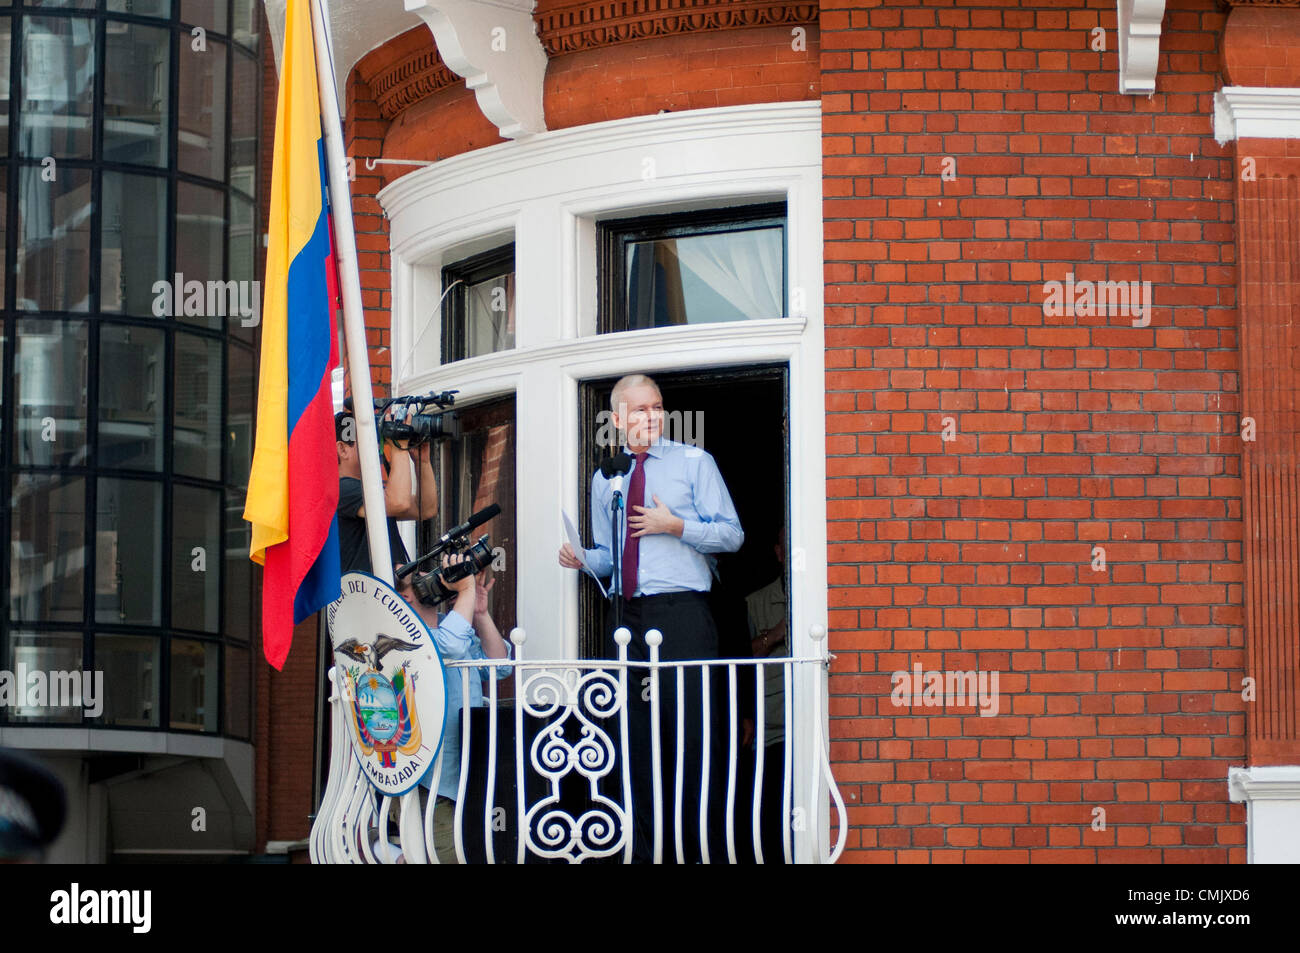 London, UK. 19.08.12. Julian Assange befasst sich mit der Welt Medien, Fans und Demonstranten vom Erdgeschoss Balkon der ecuadorianischen Botschaft. Stockfoto